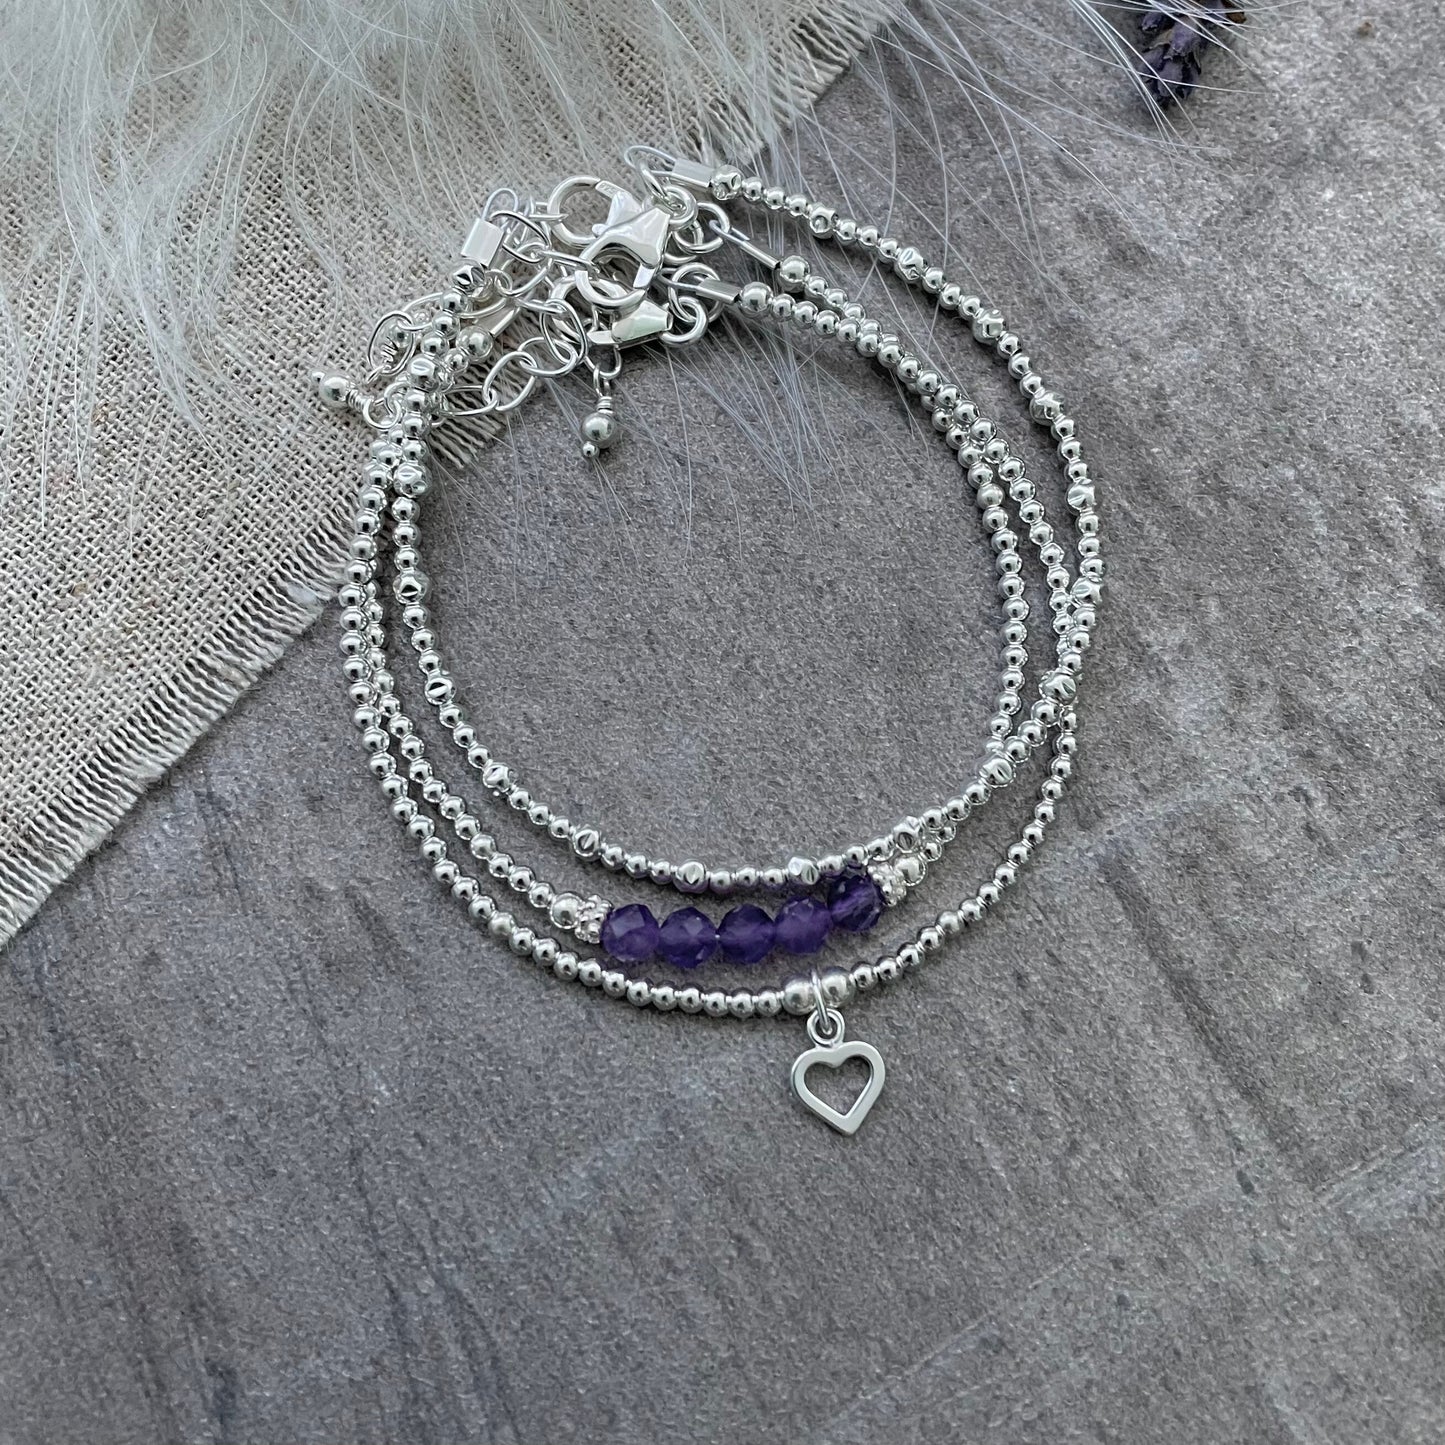 A Dainty February Birthstone Amethyst Bracelet Set, February Stacking Bracelets for Women in Sterling Silver